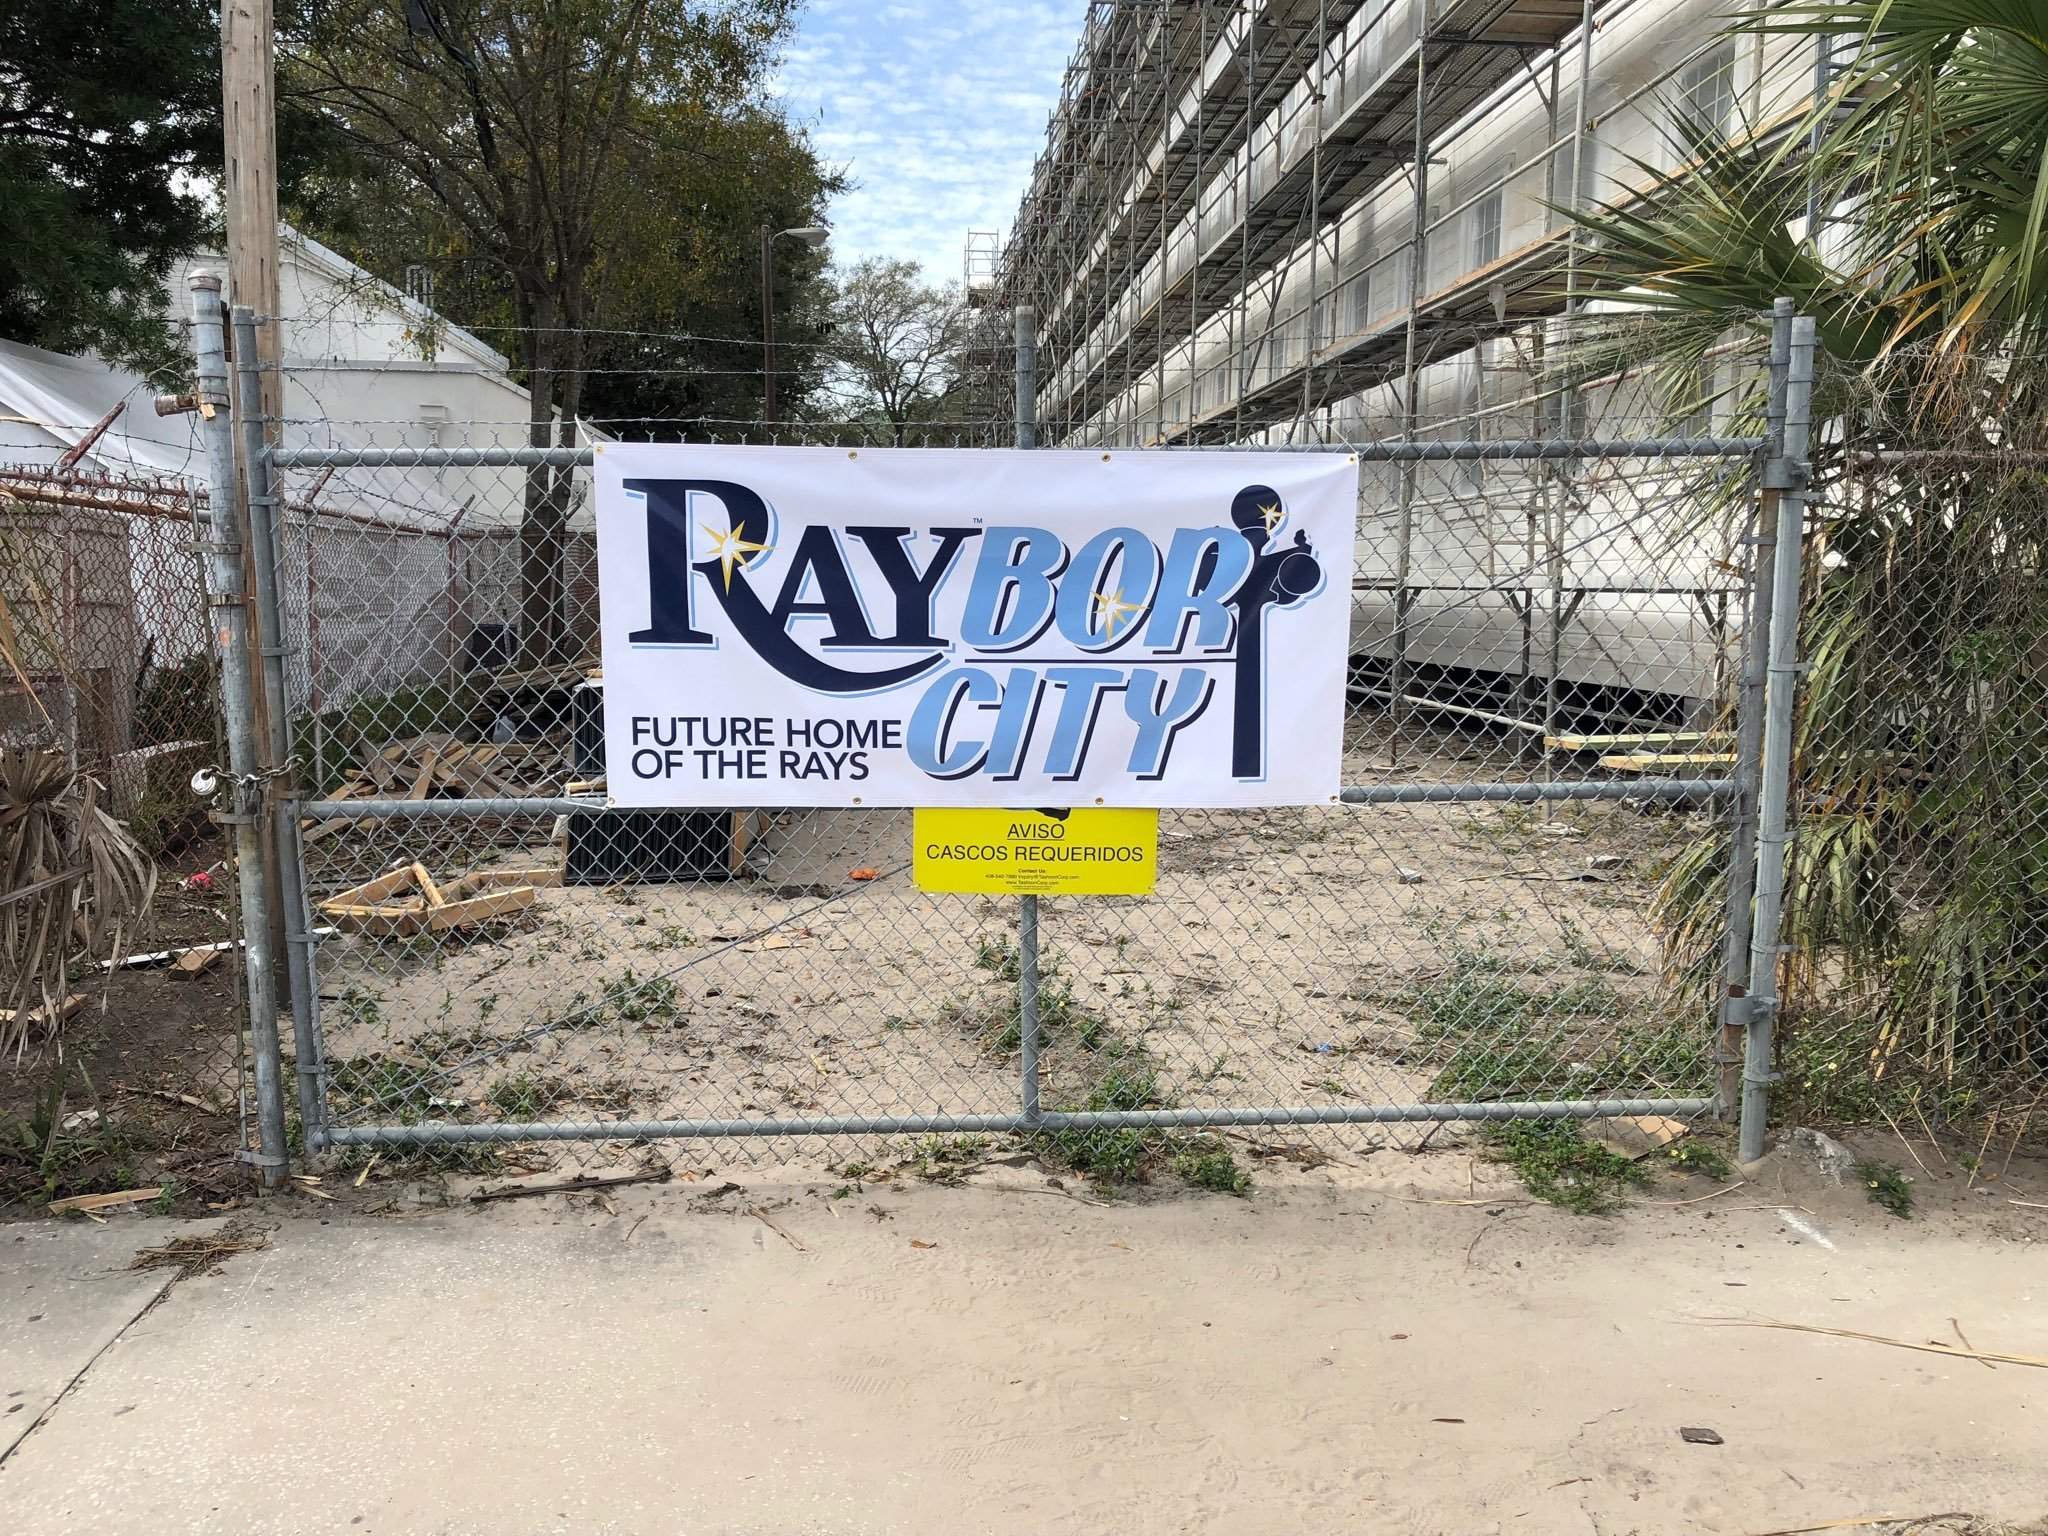 Rays City Connect #rays #tampa #tampabay #tampabayrays #florida #baseb